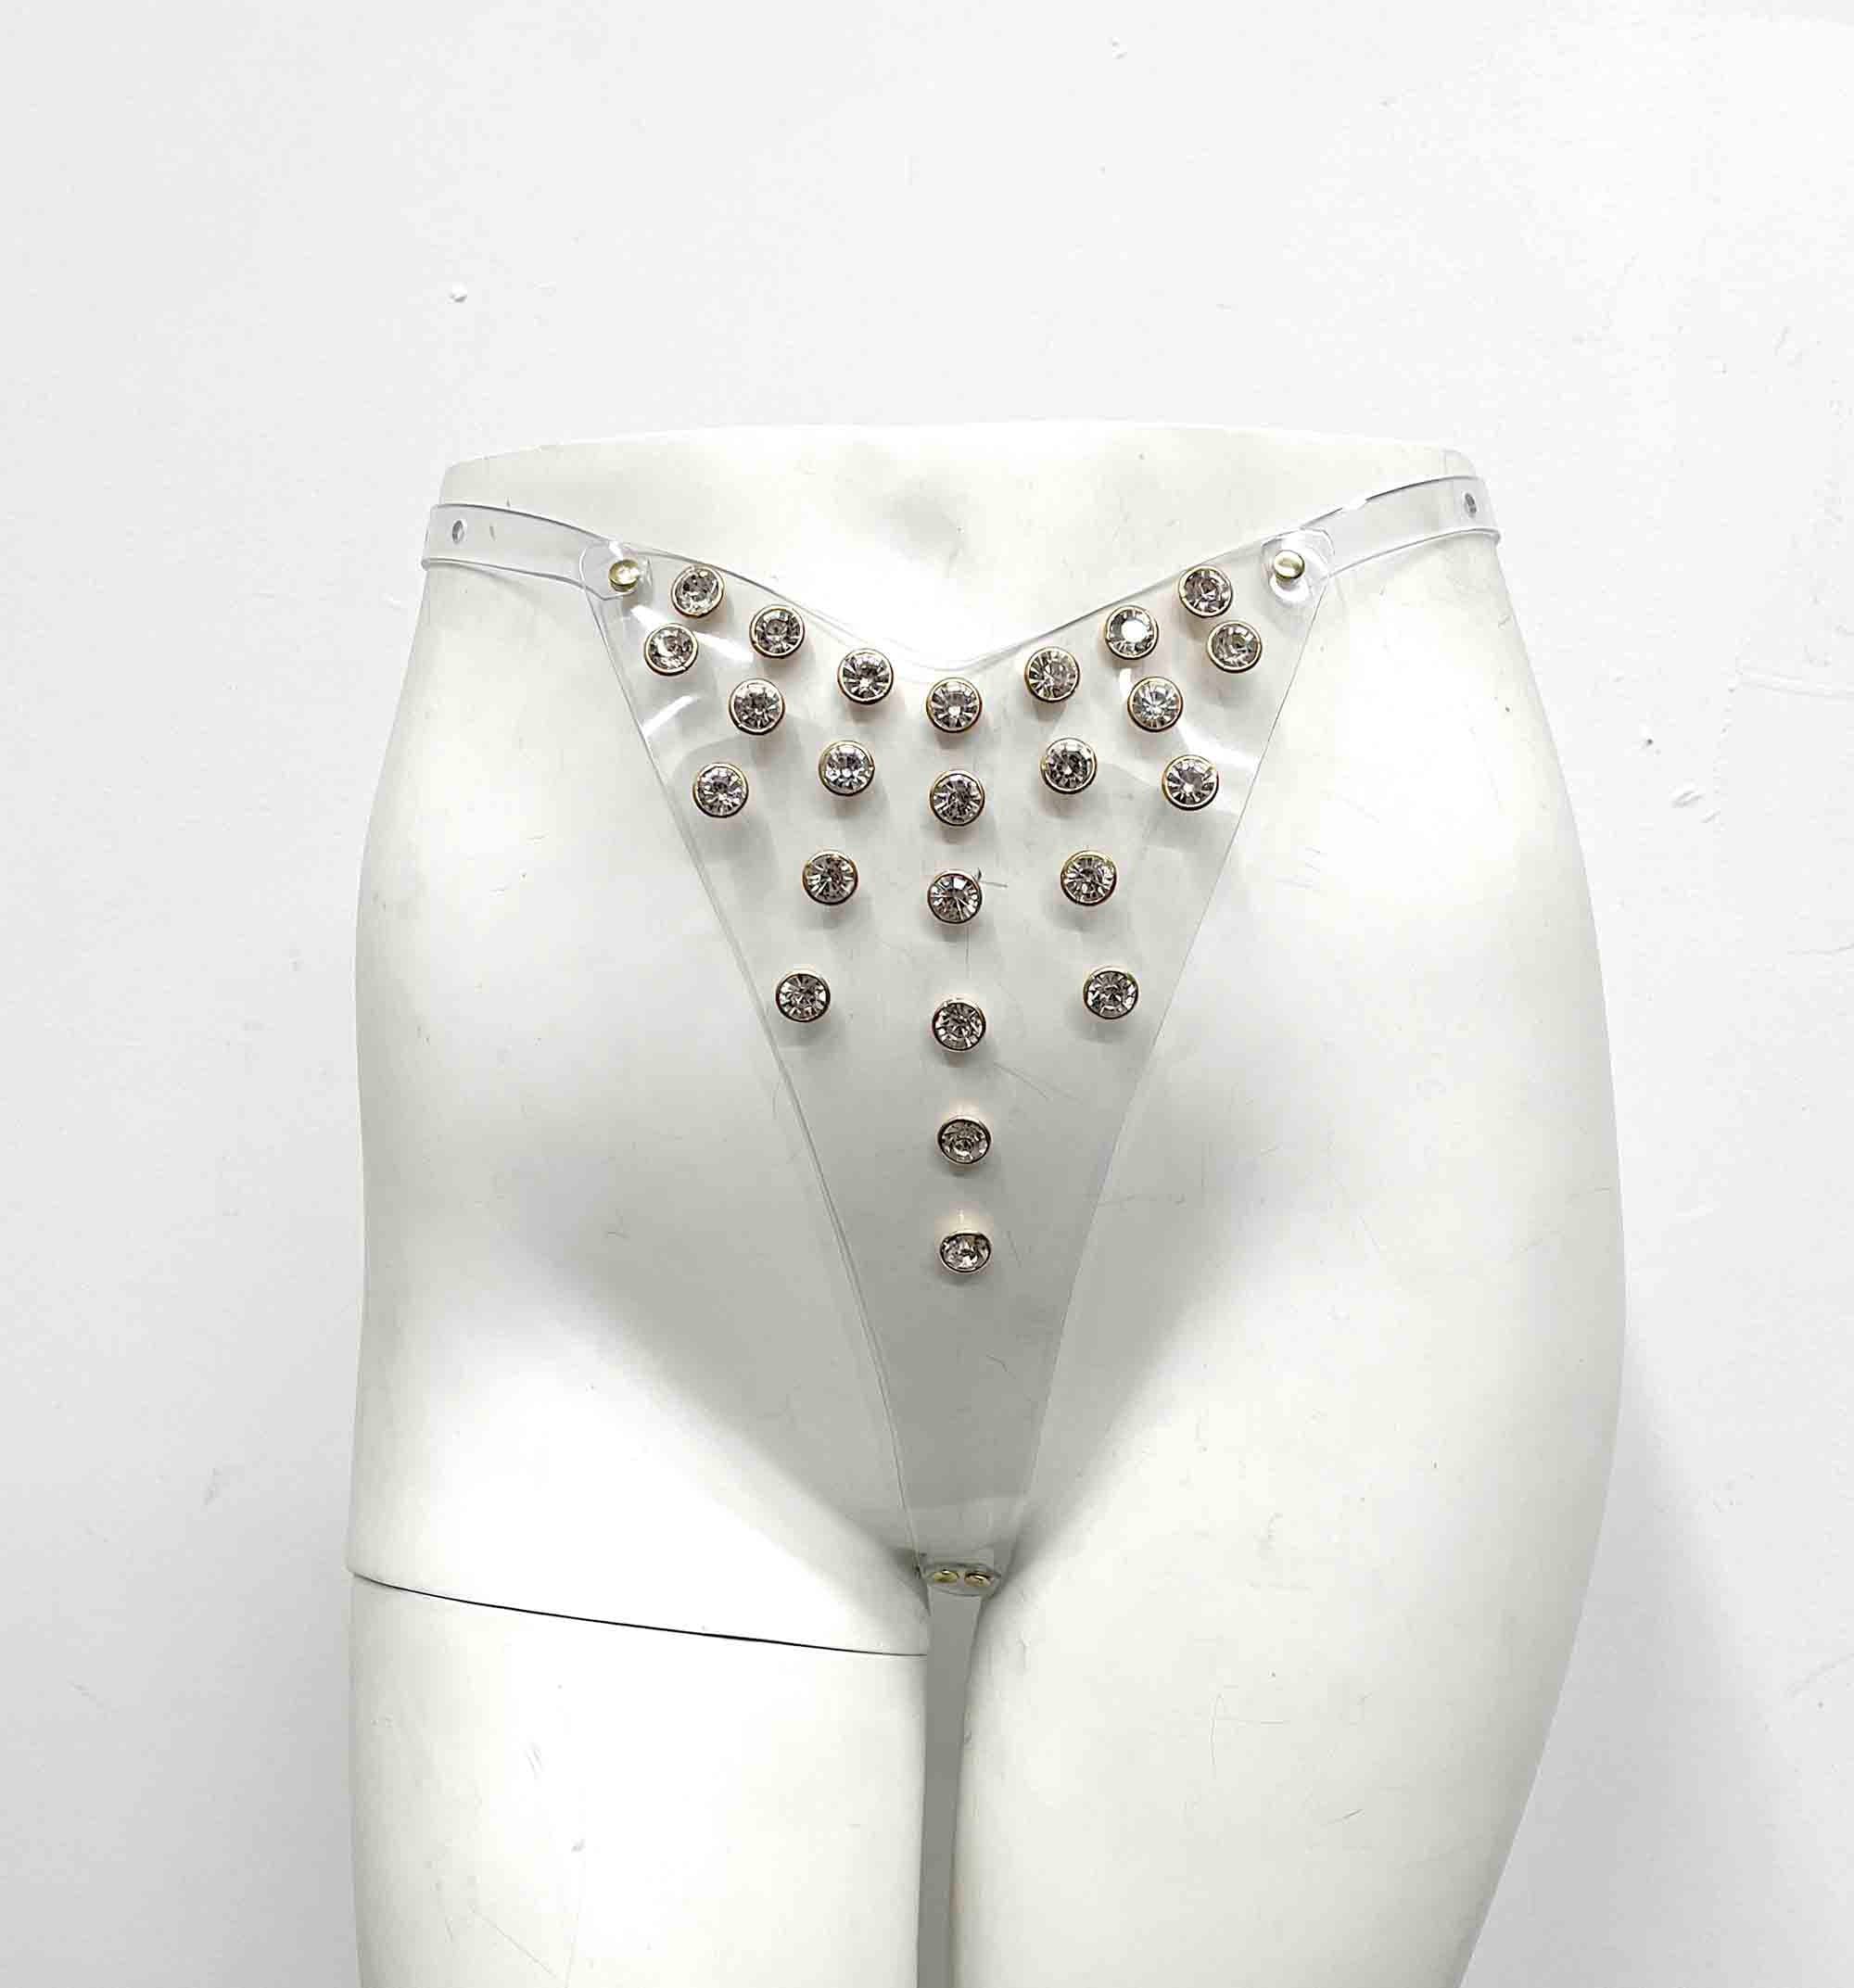 Transparent Short Shorts/ Mens Underwear/ Elastic Mesh/ Womens